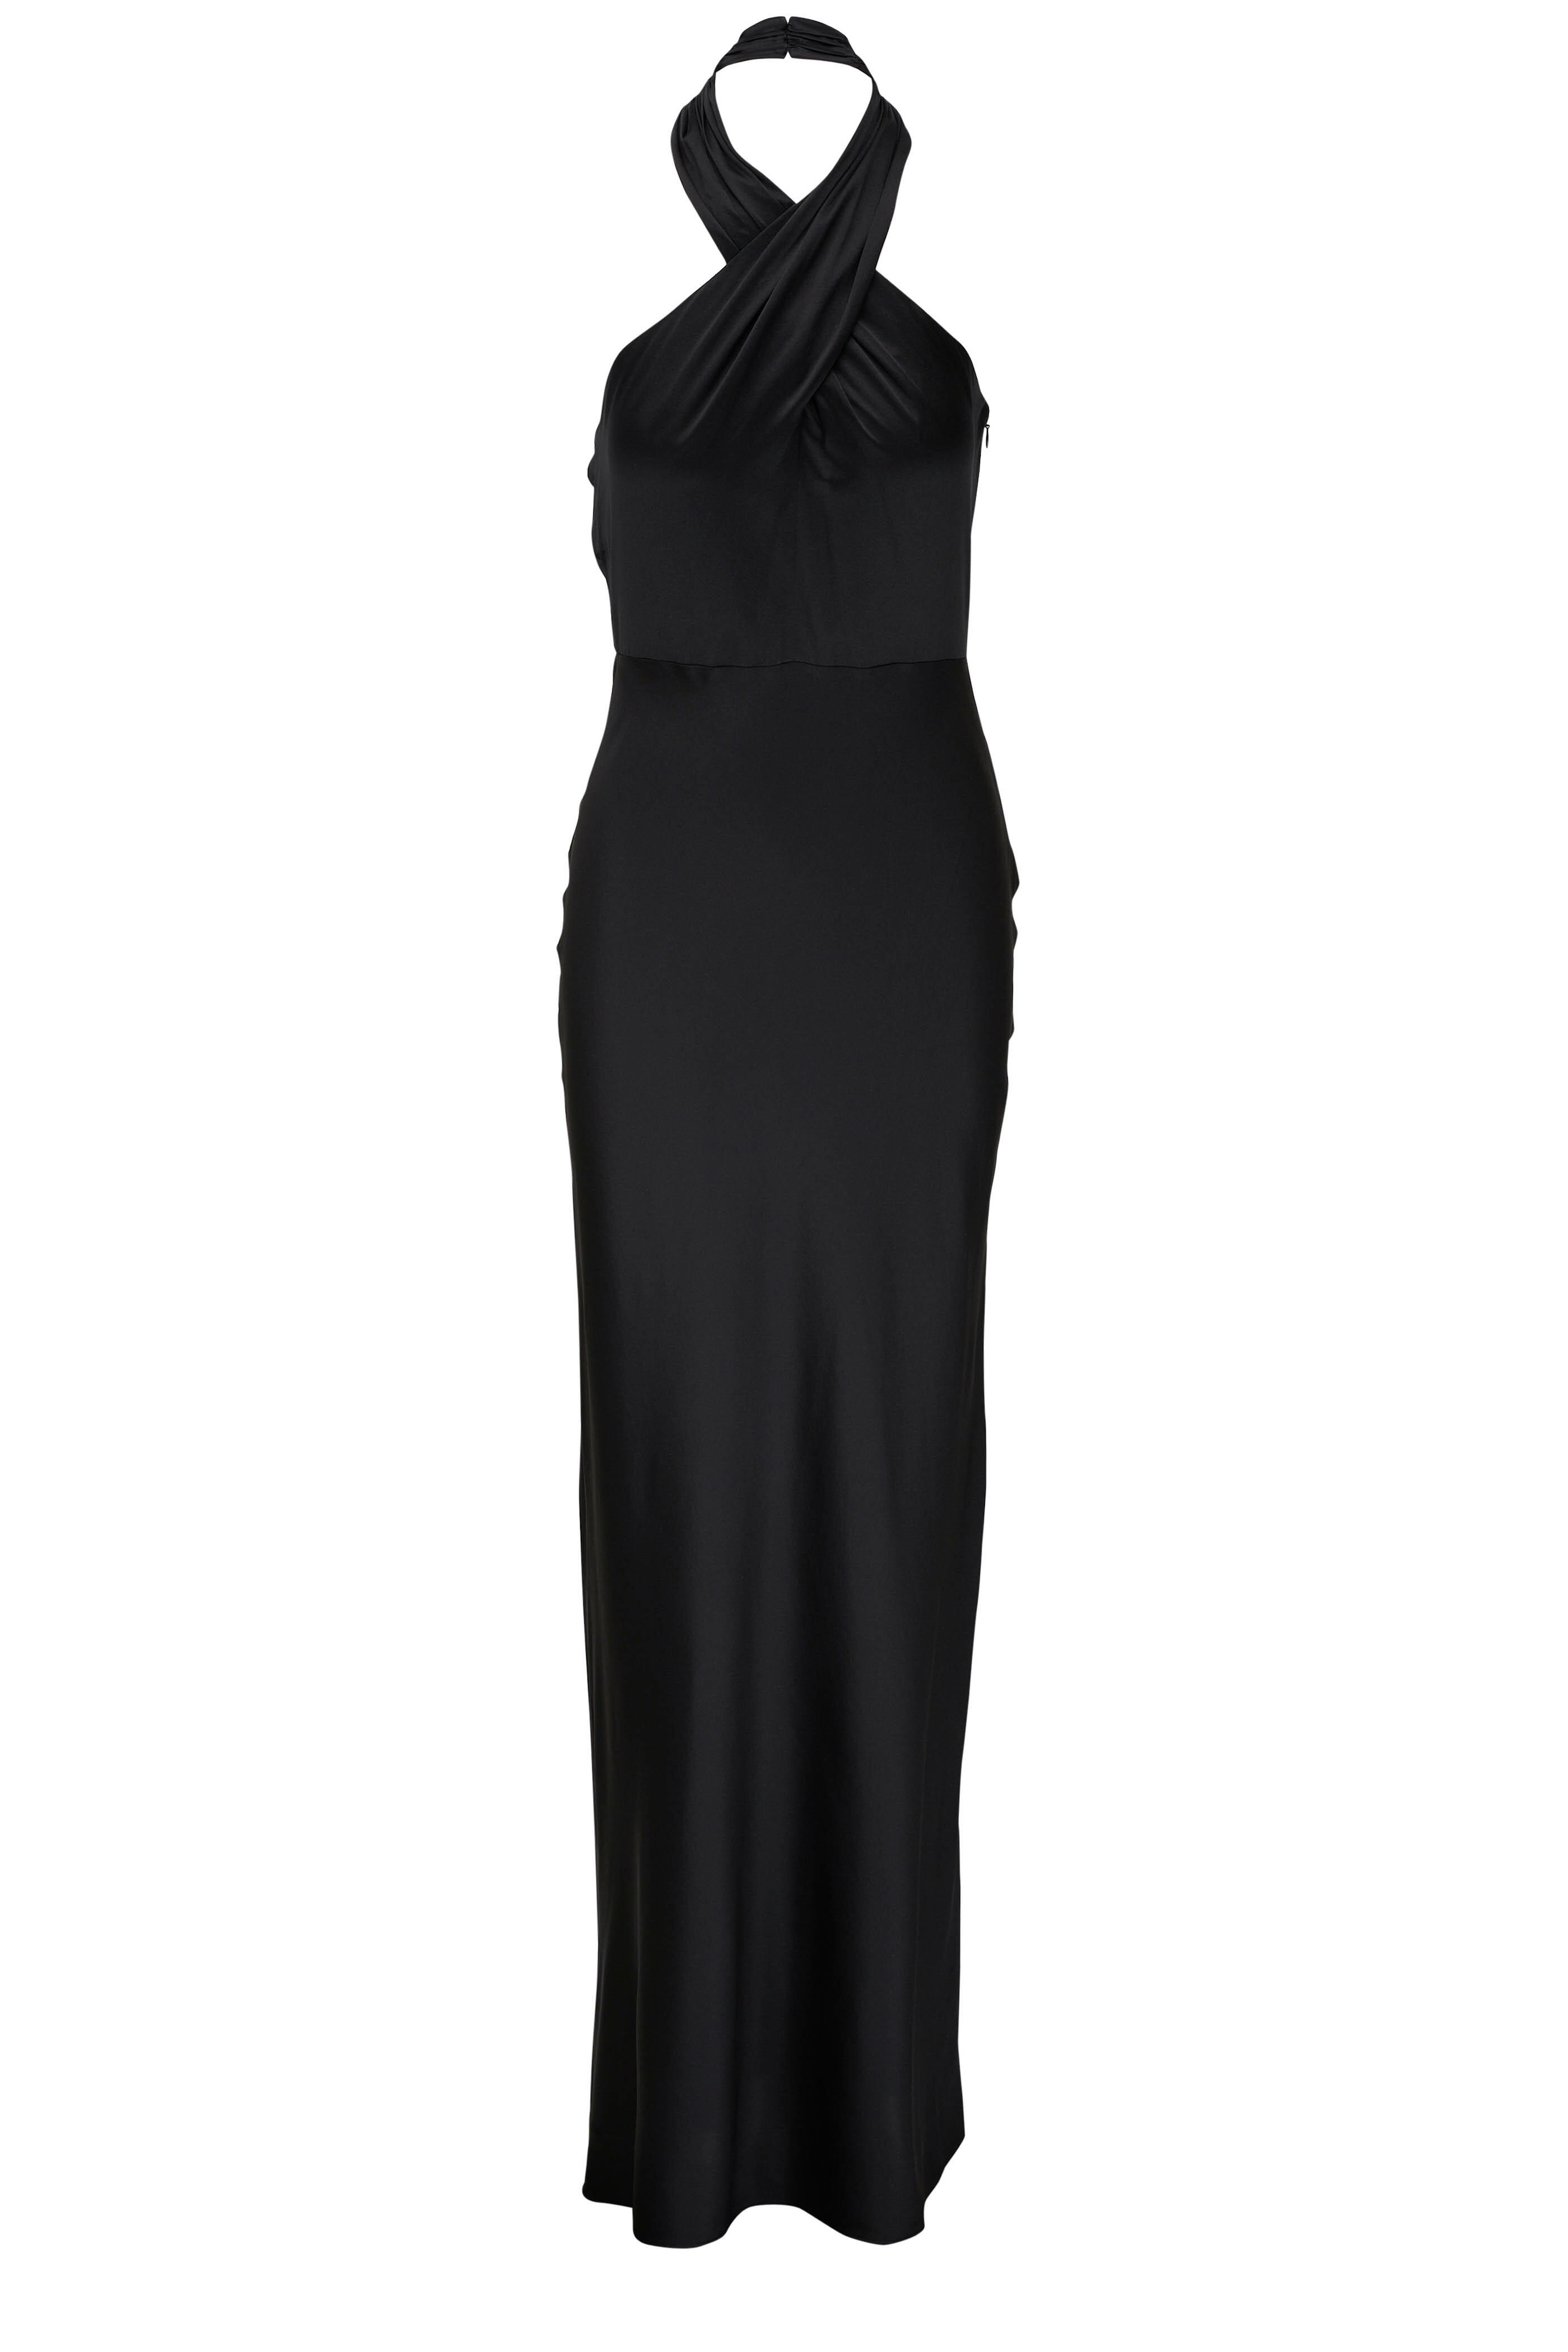 Veronica Beard - Alberta Black Stretch Silk Maxi Dress